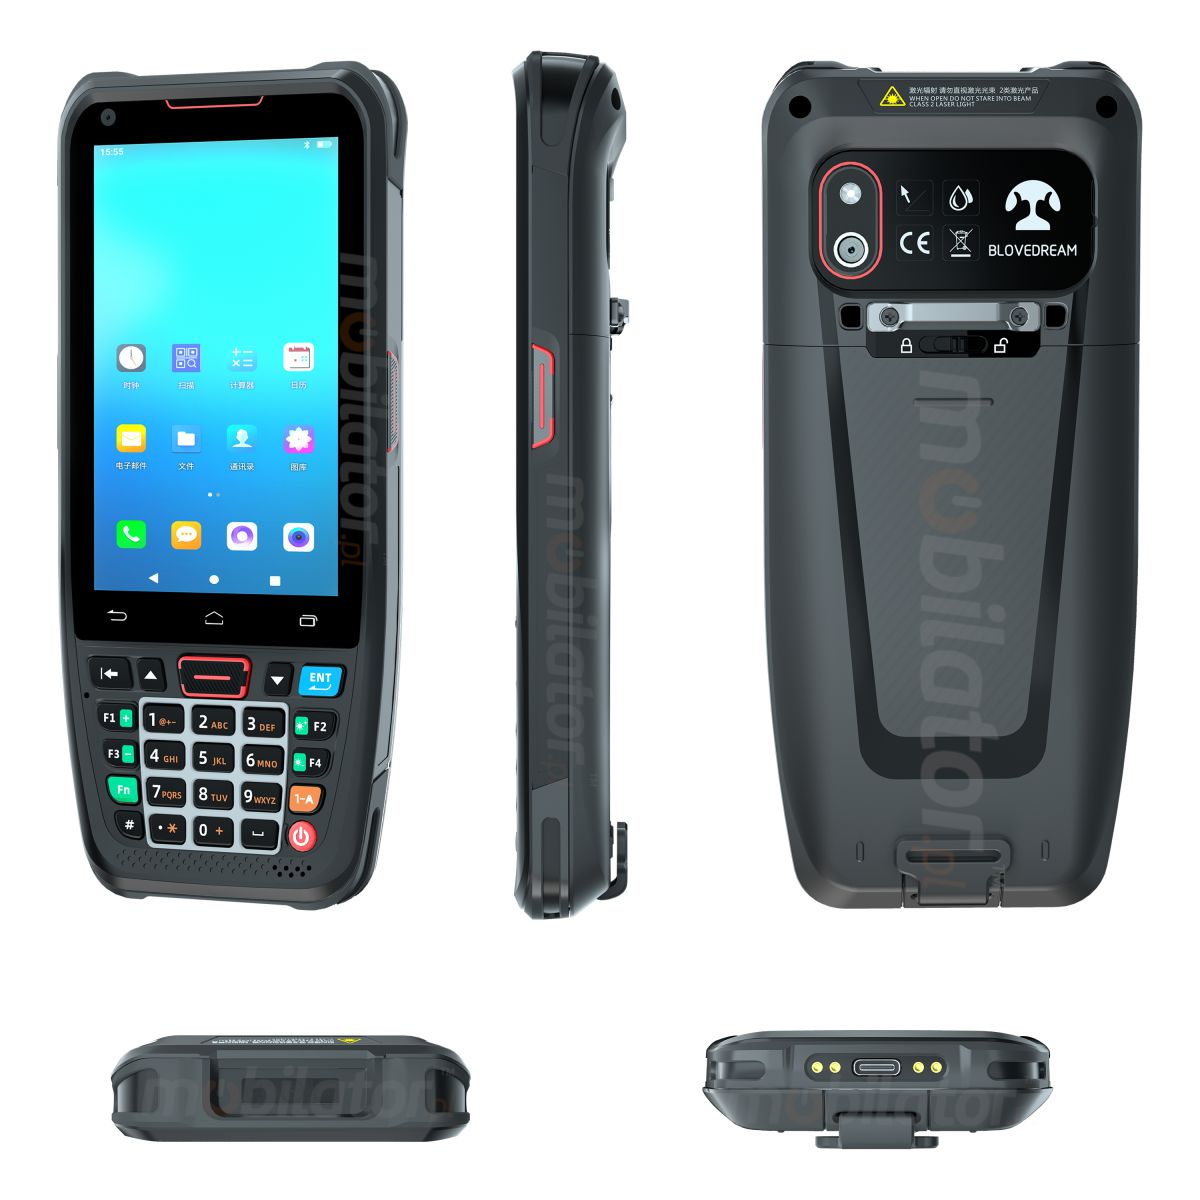 MobiPad L400N v.2 - Rugged data terminal, NFC module and 1D barcode scanner, IP66 standard, 2GB RAM, 16GB ROM 